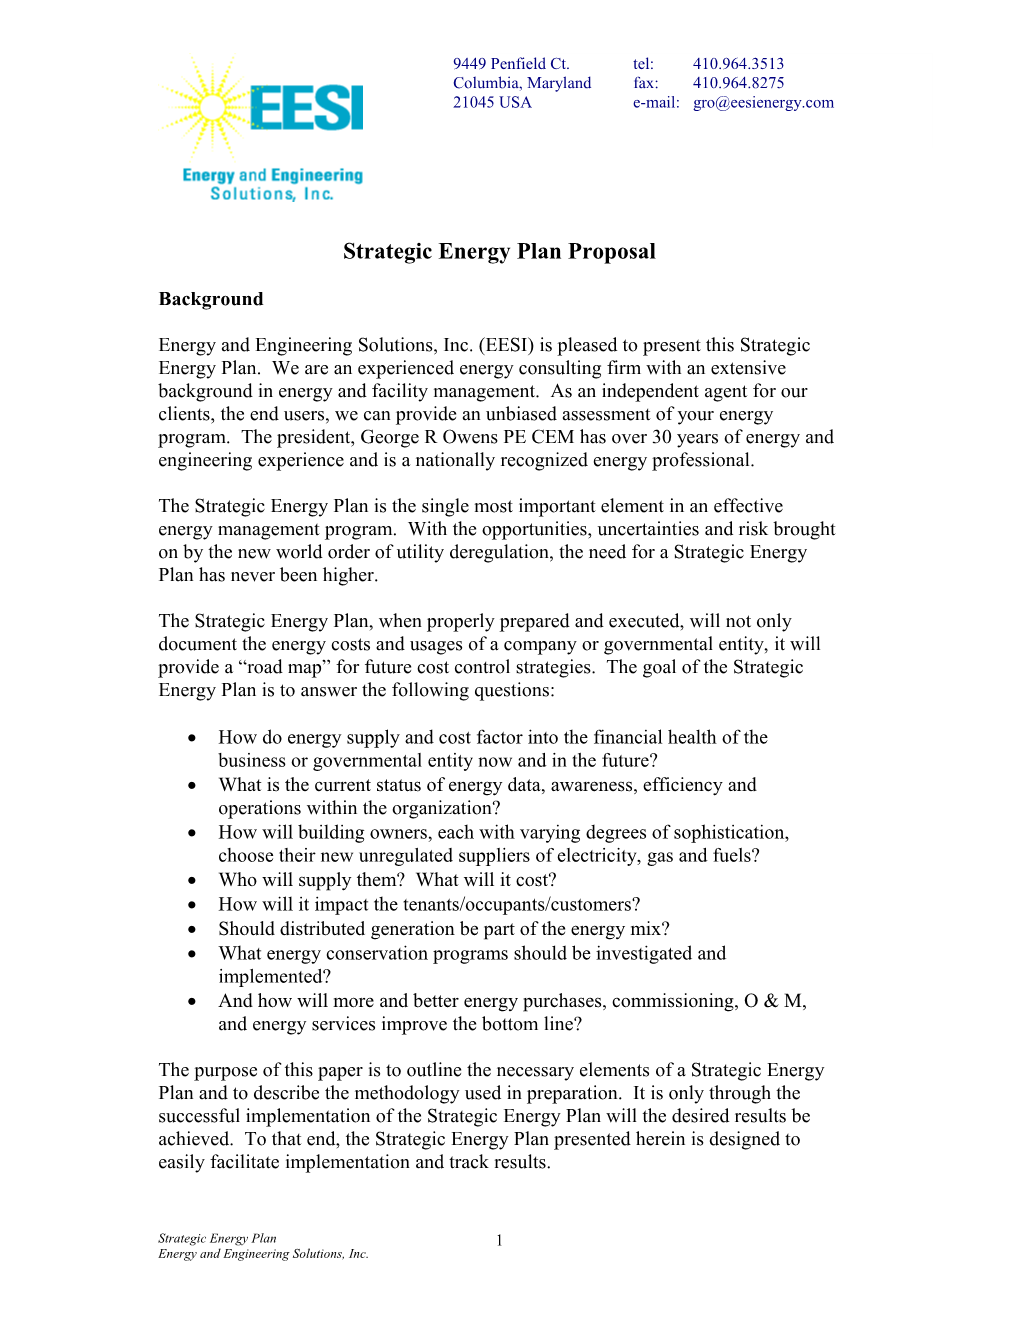 Strategic Energy Plan Proposal